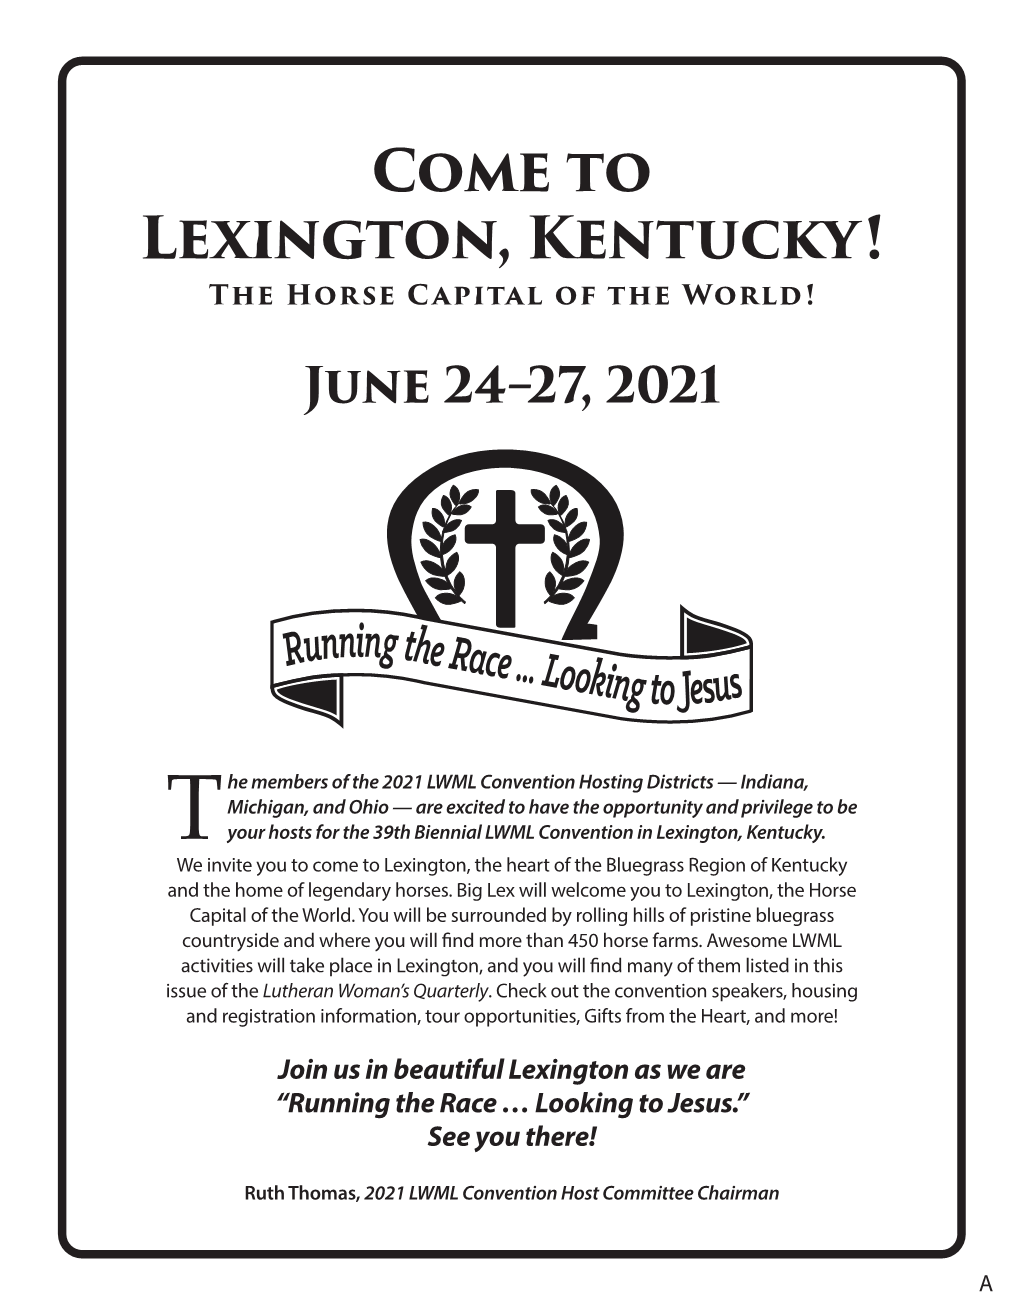 Come to Lexington, Kentucky! the Horse Capital of the World!